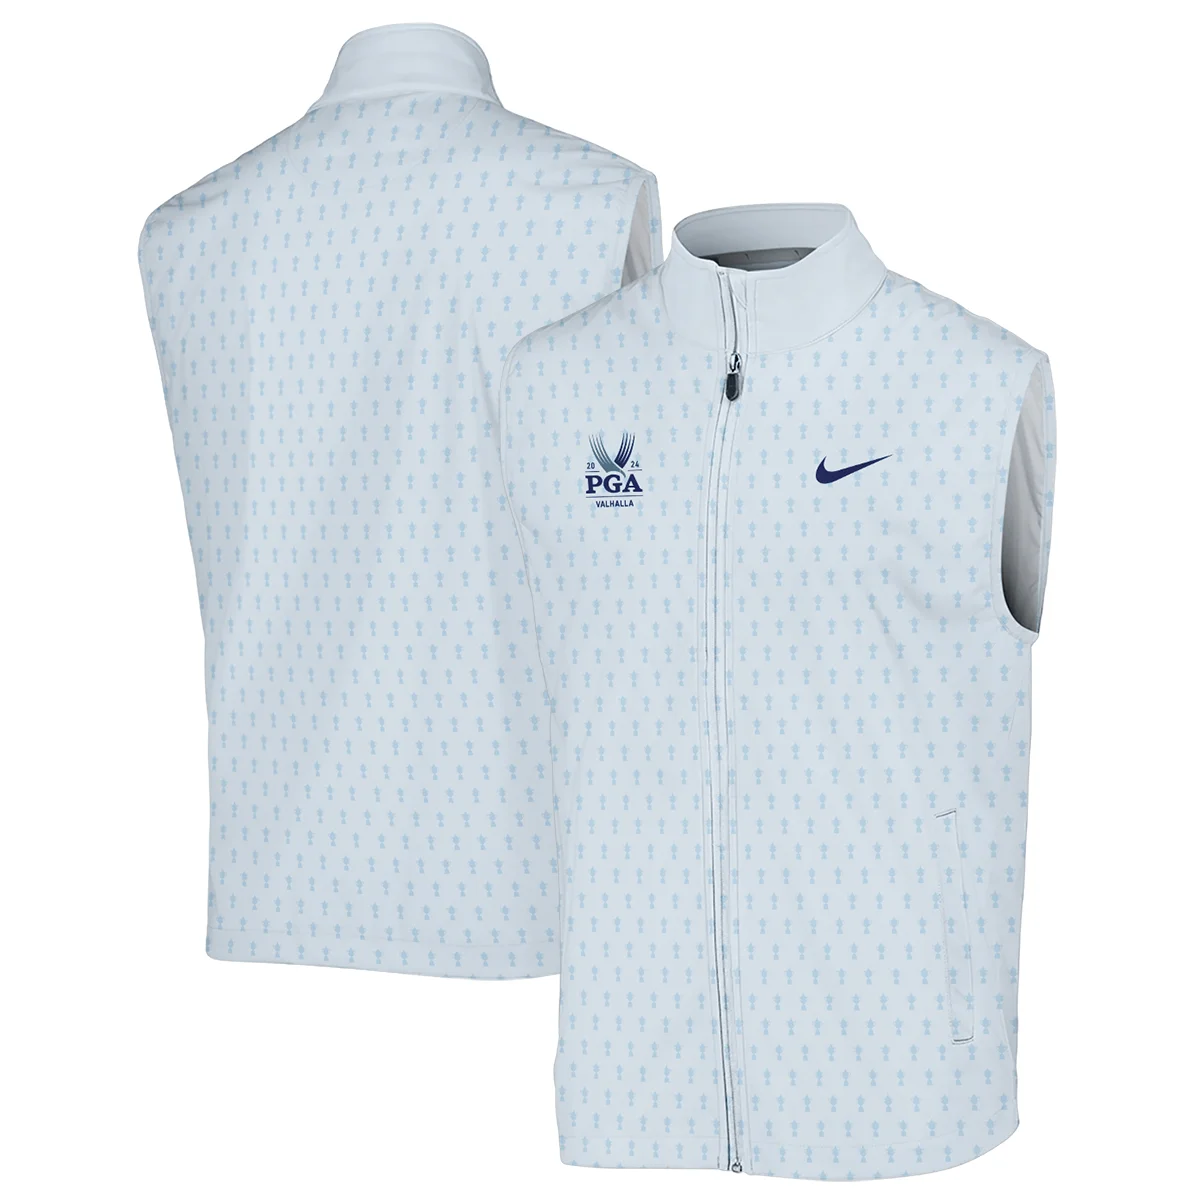 Golf Pattern Cup White Mix Light Blue 2024 PGA Championship Valhalla Nike Unisex Sweatshirt Style Classic Sweatshirt